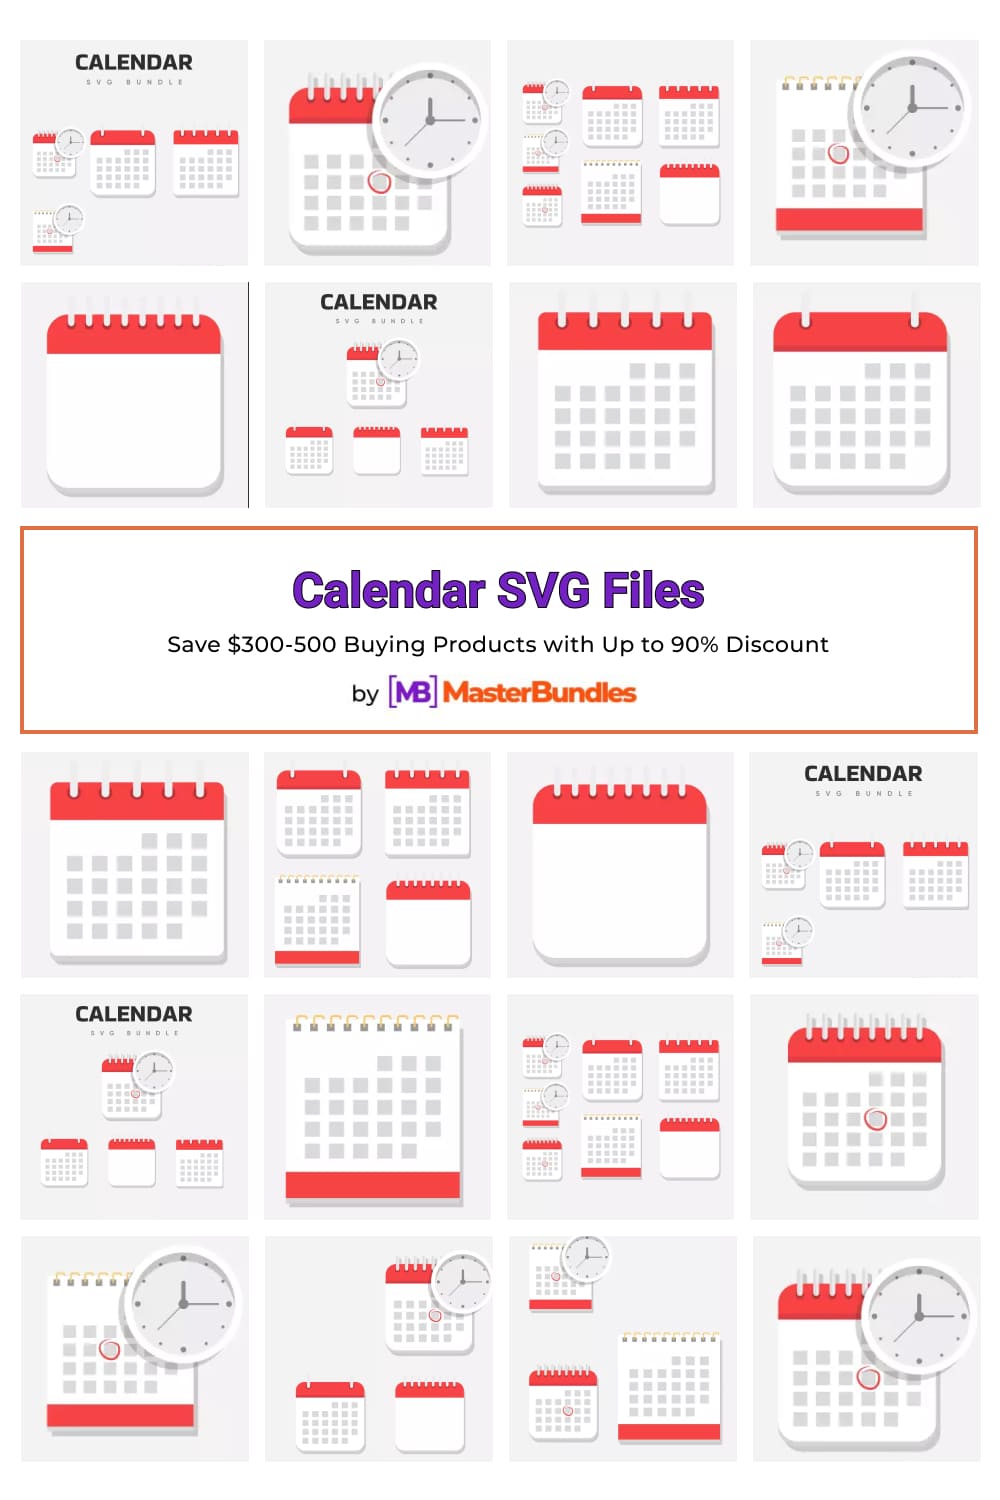 Calendar SVG Files Pinterest image.